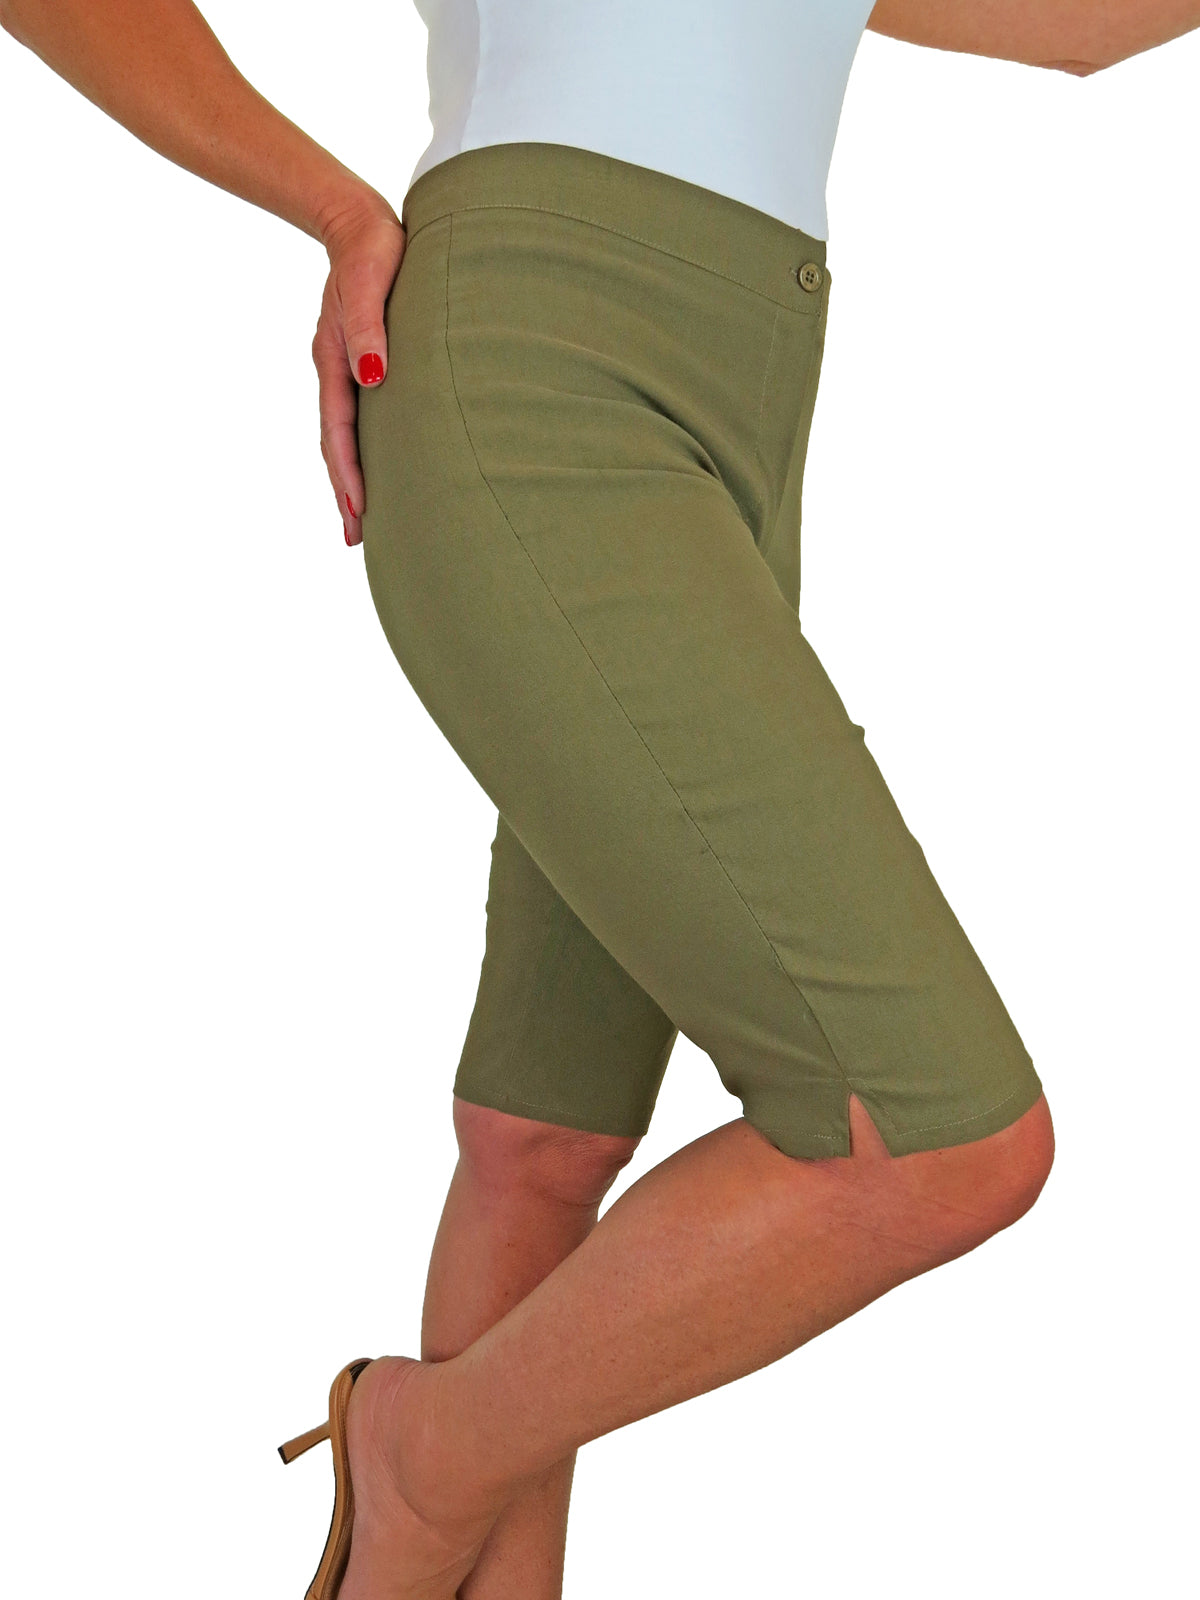 Womens High Waist Skinny Stretch Pedal Pusher Style Summer Shorts Khaki Green